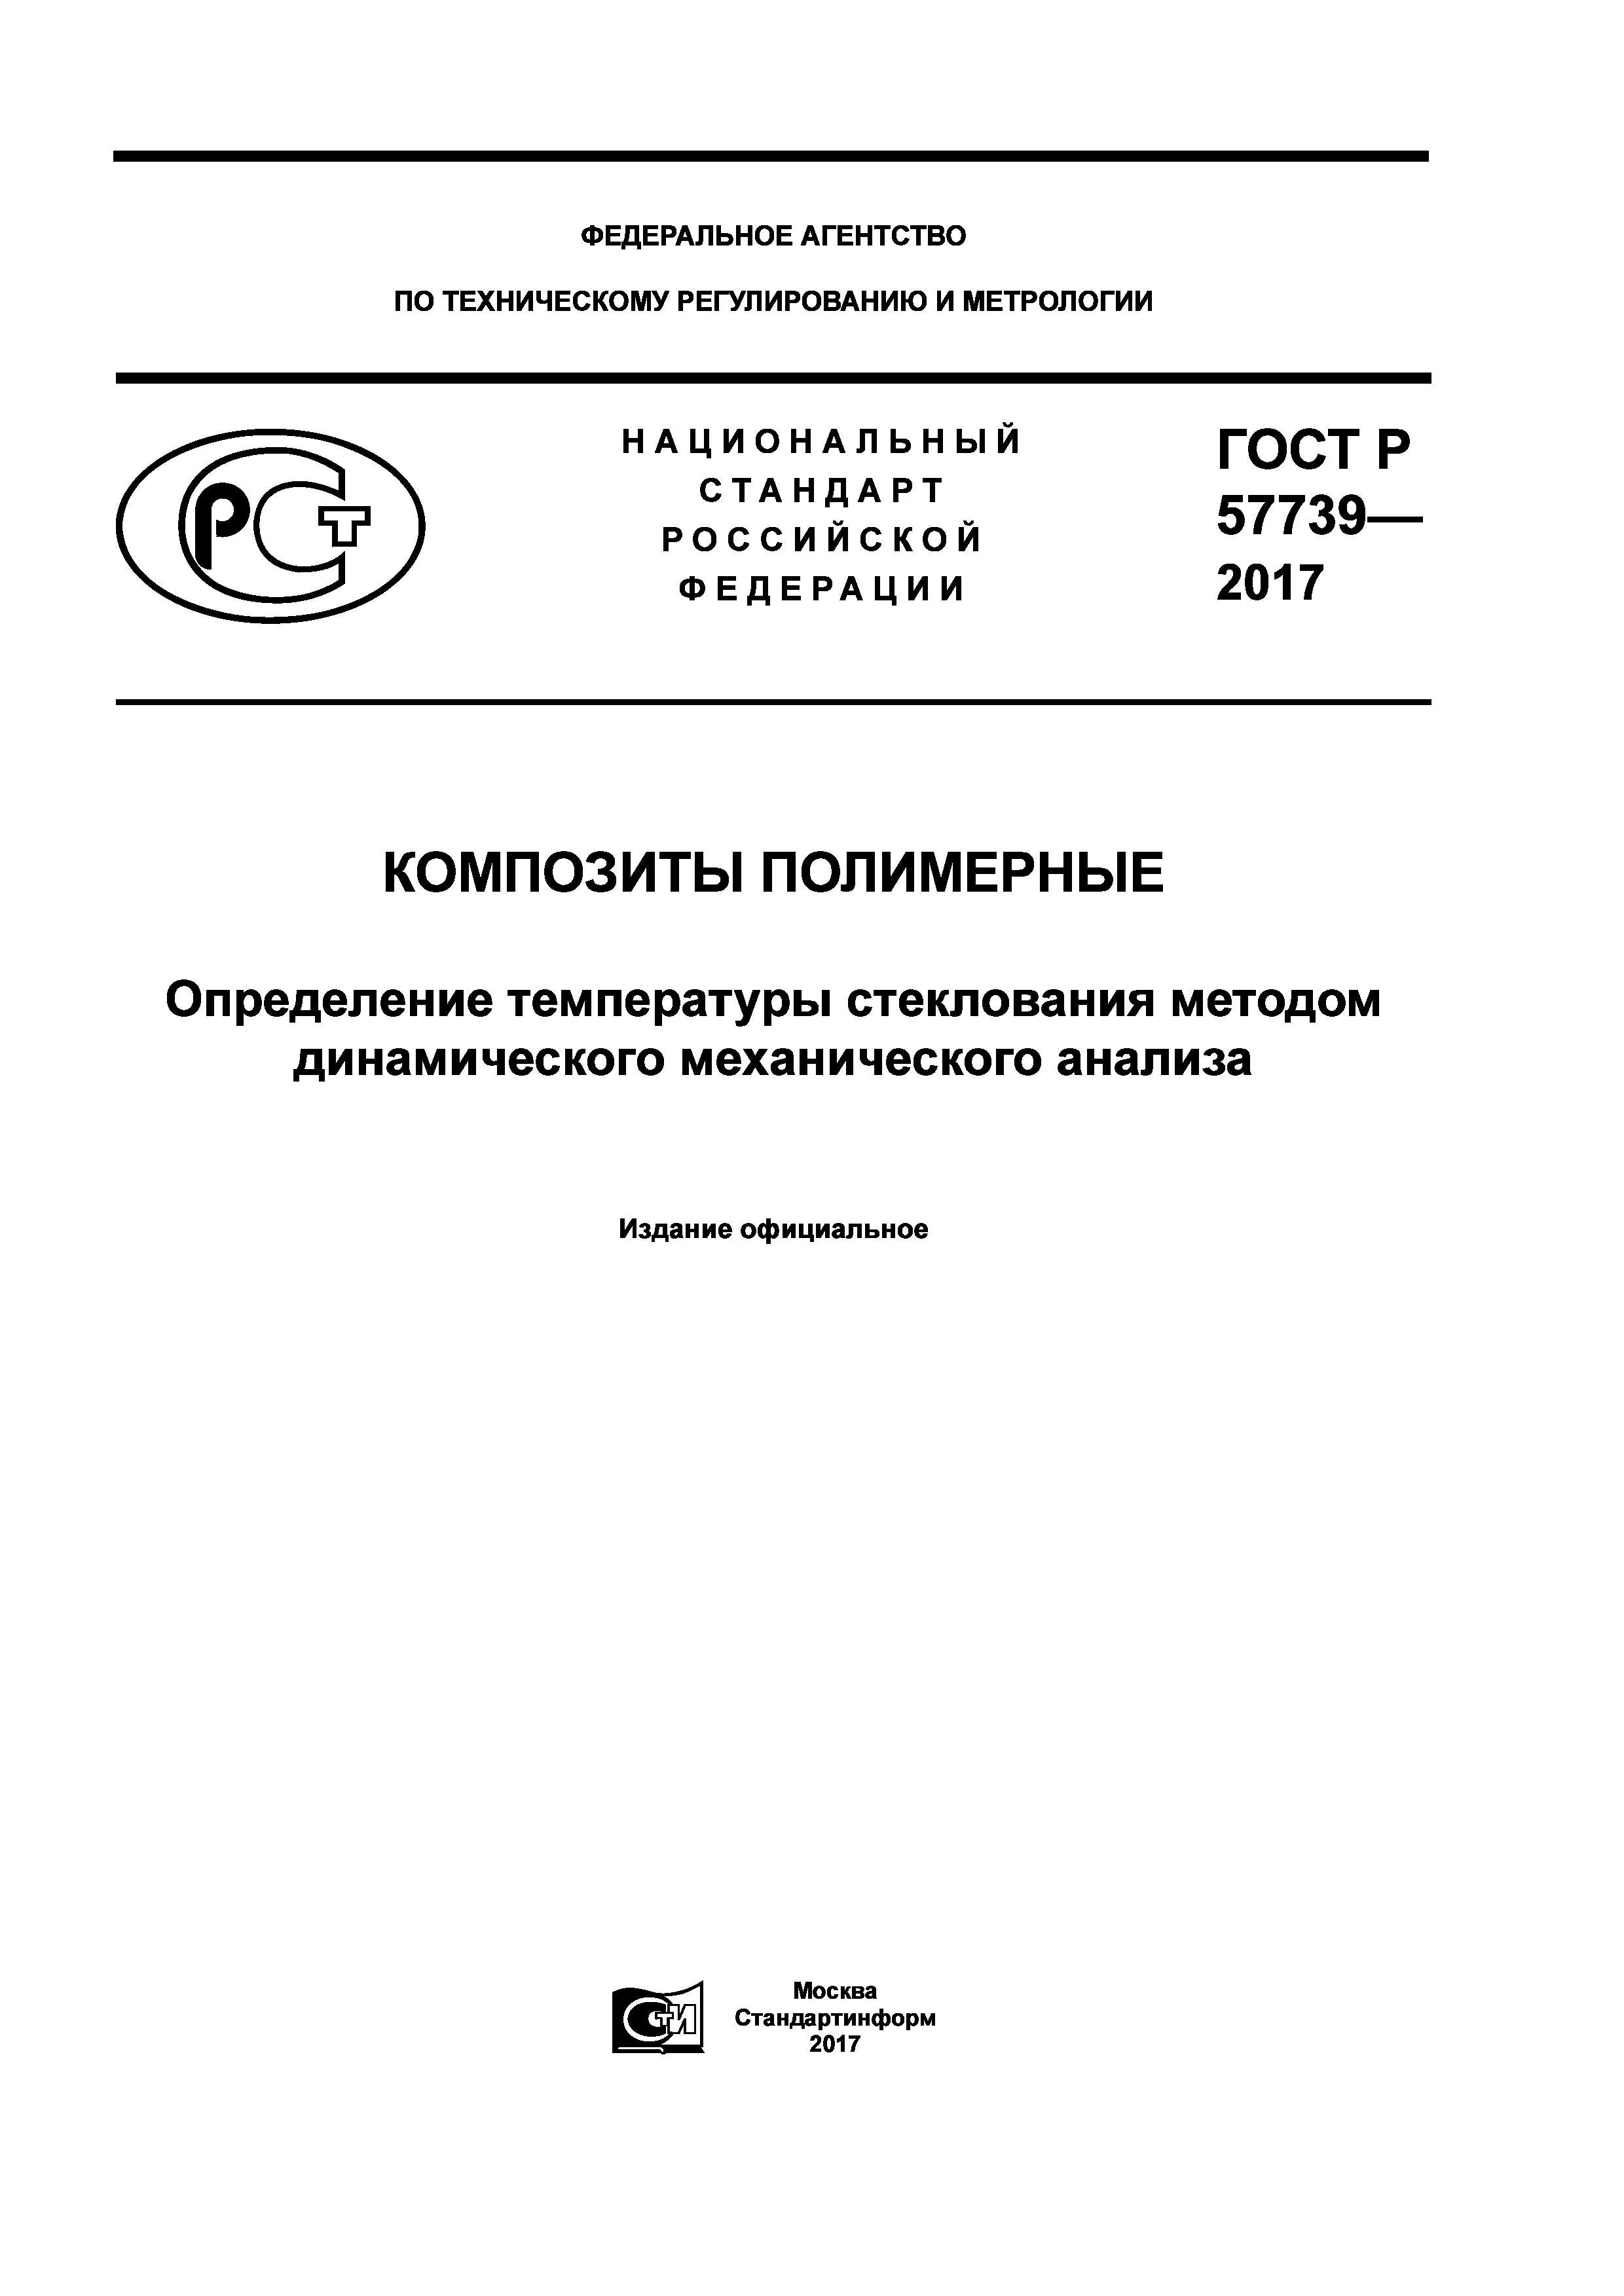 ГОСТ Р 57739-2017